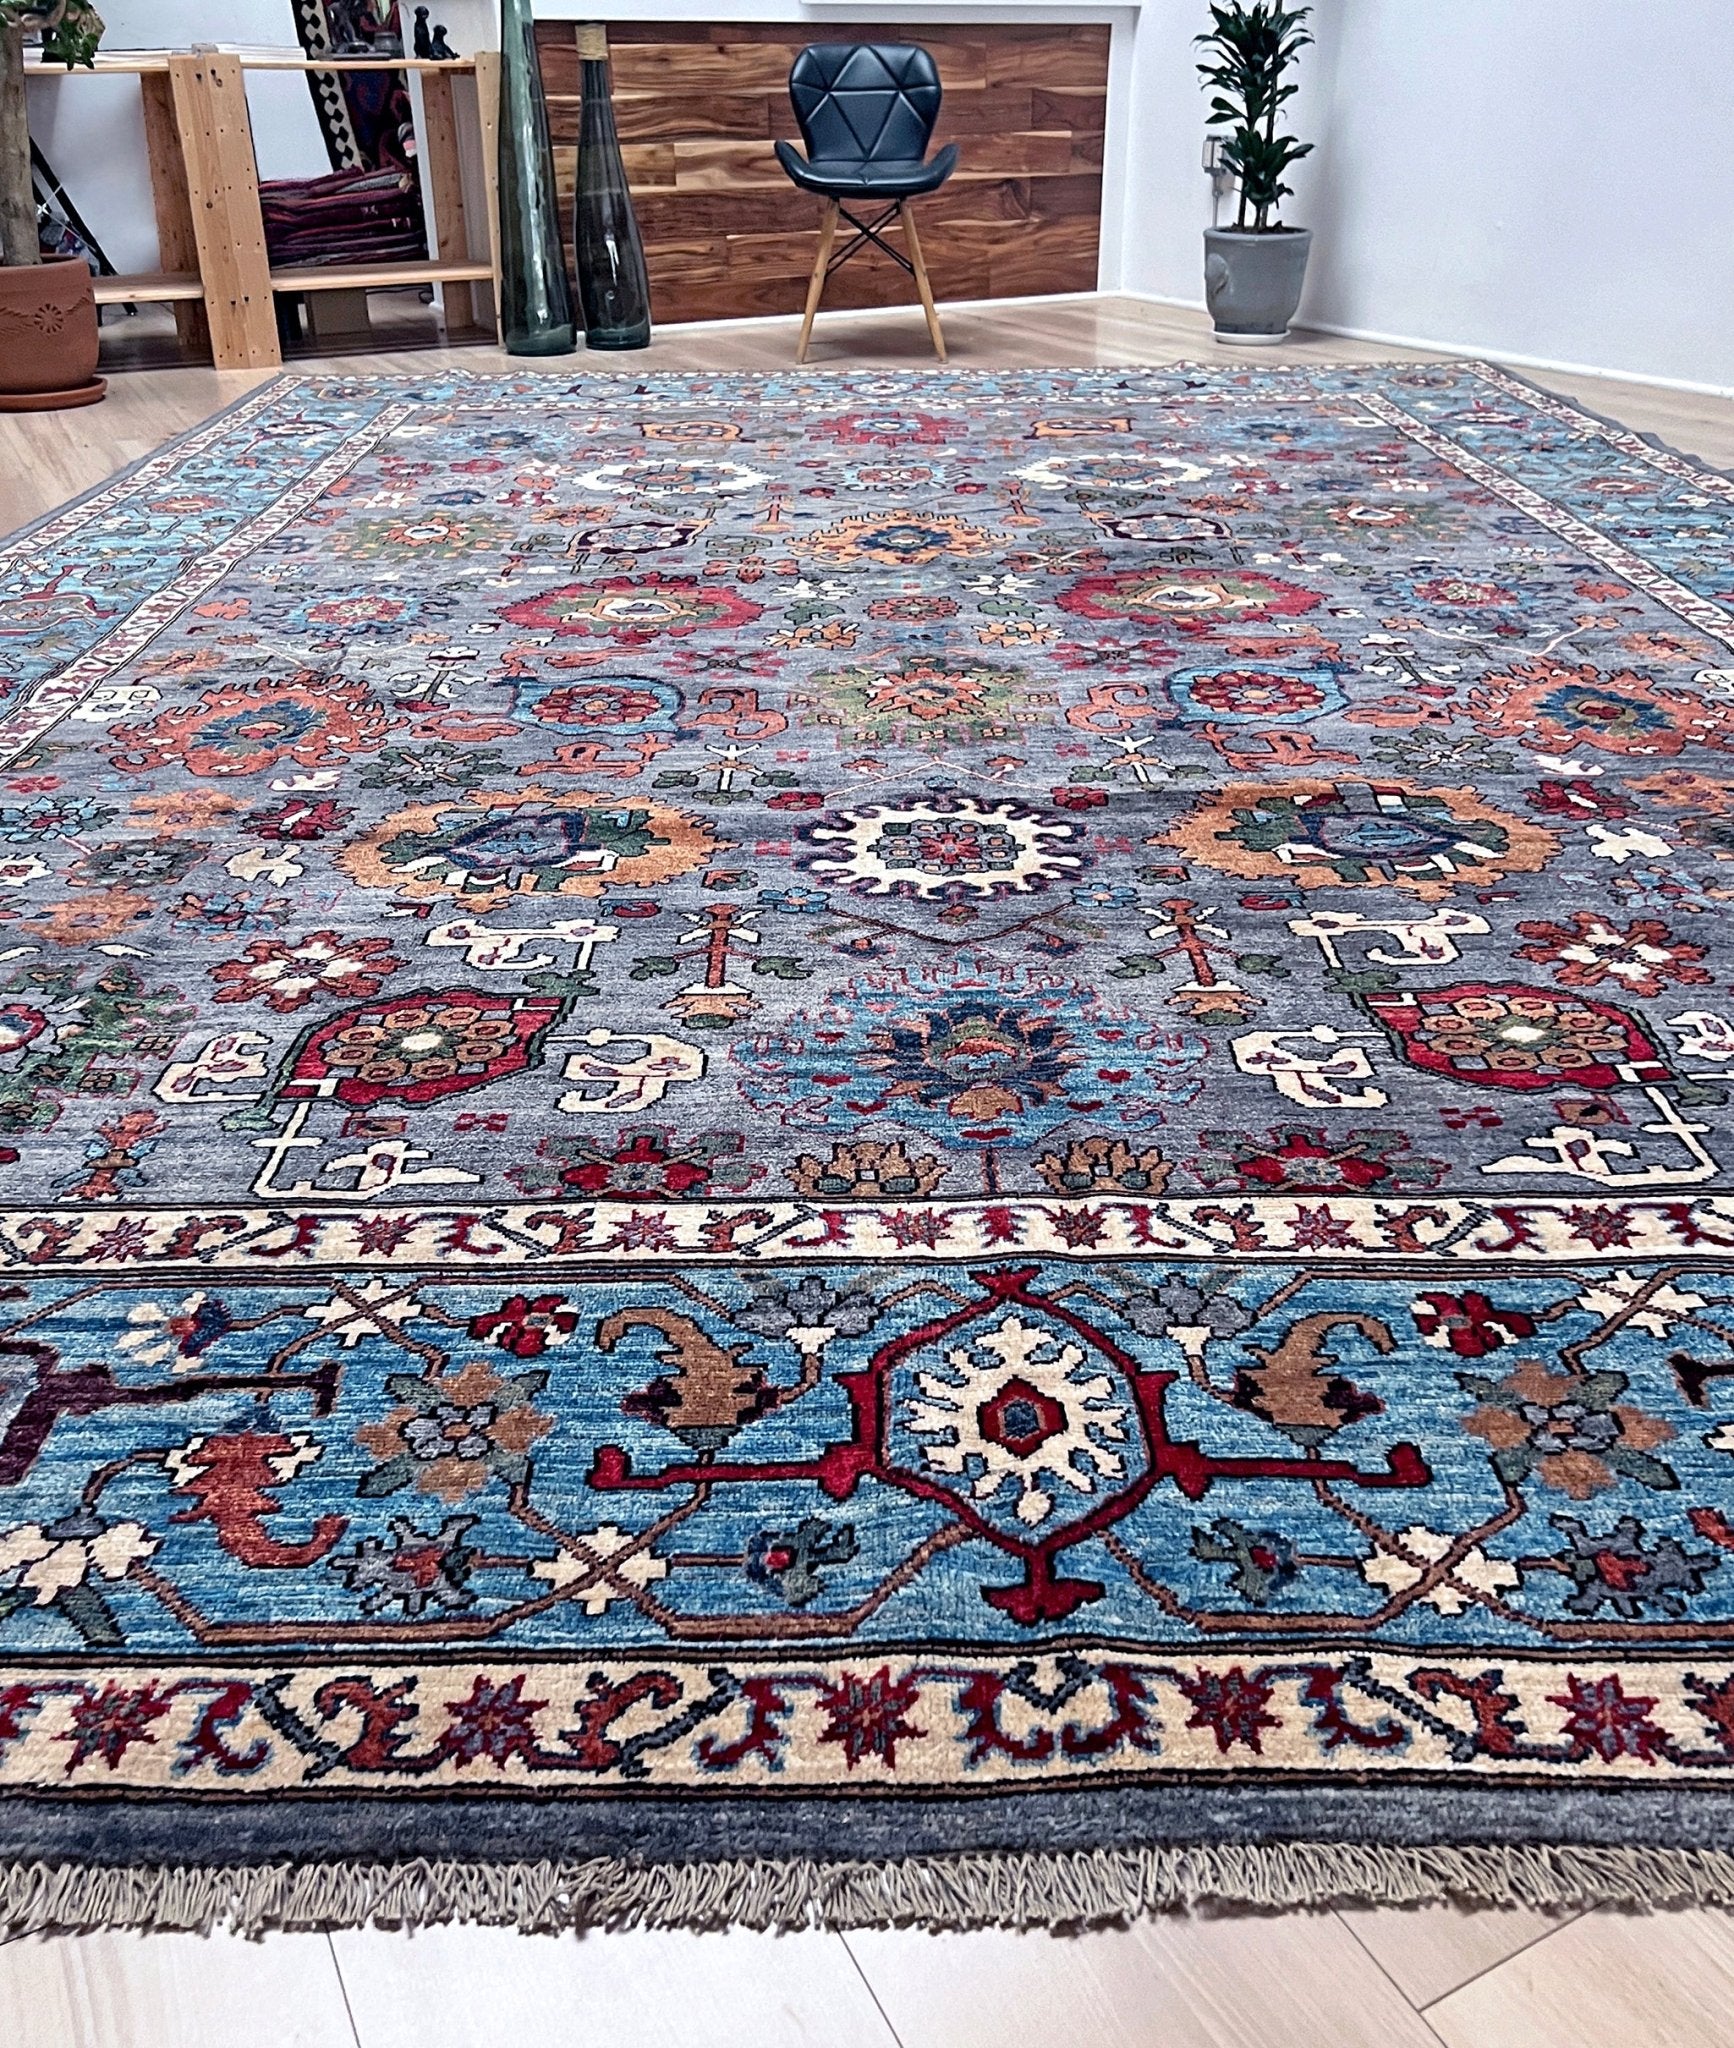 Sultani Handmade wool 10x14 area rug. Oriental rug shop san francisco bay area.  Carpet store berkeley palo alto.